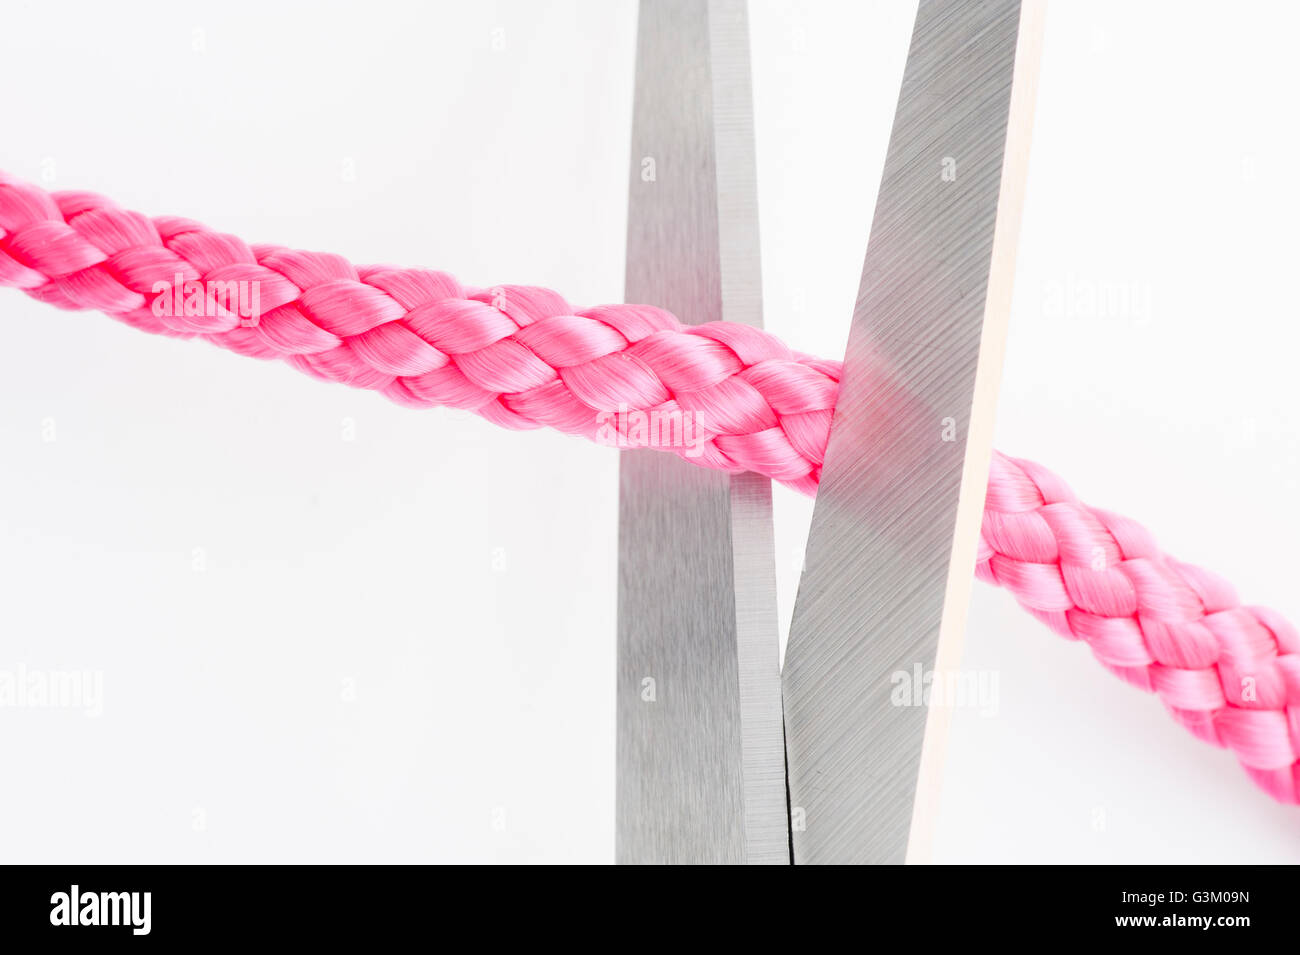 Scissors cutting a pink string Stock Photo - Alamy